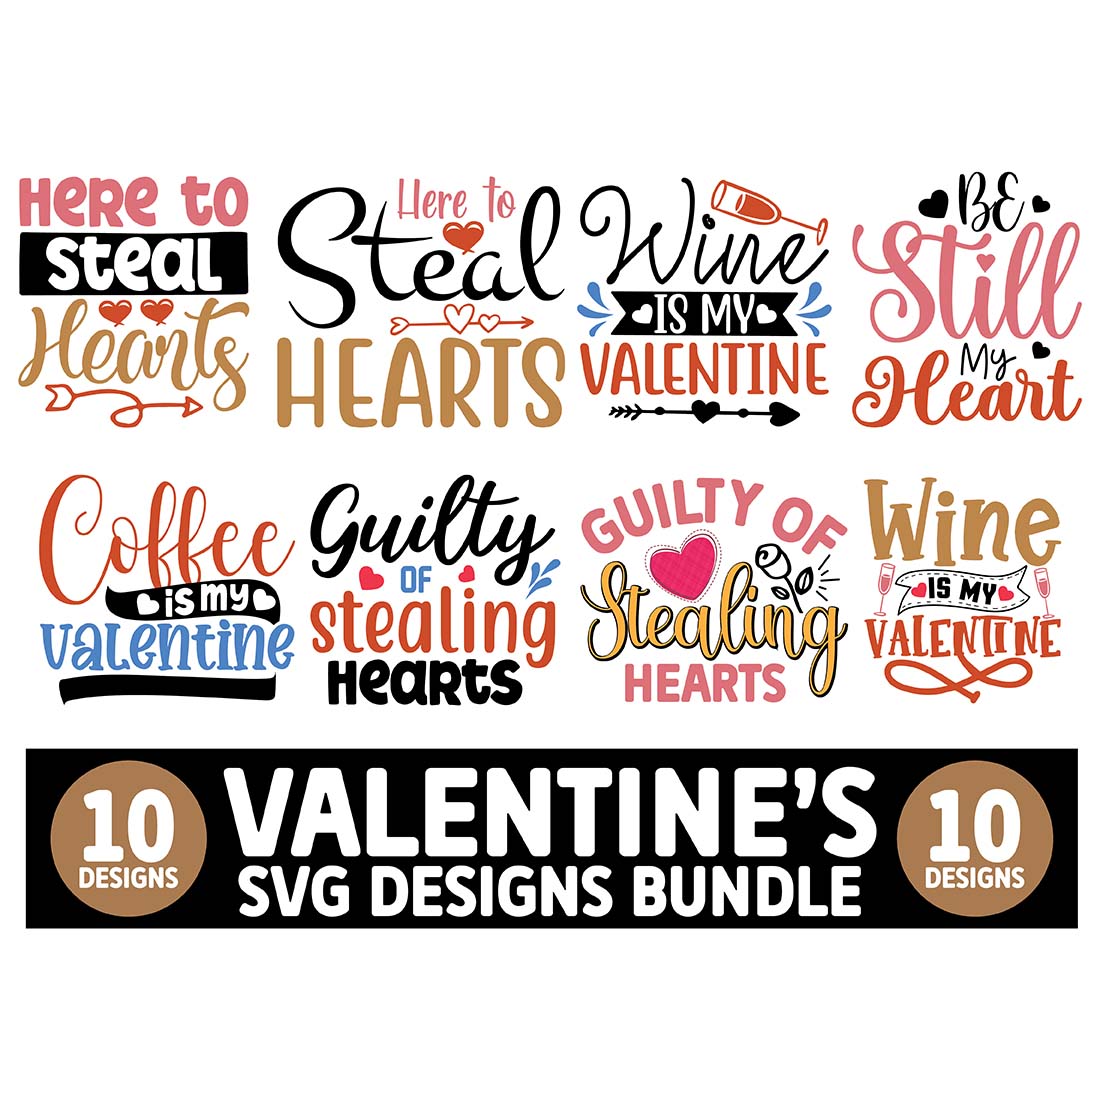 10 Valentines SVG Designs Bundle main cover